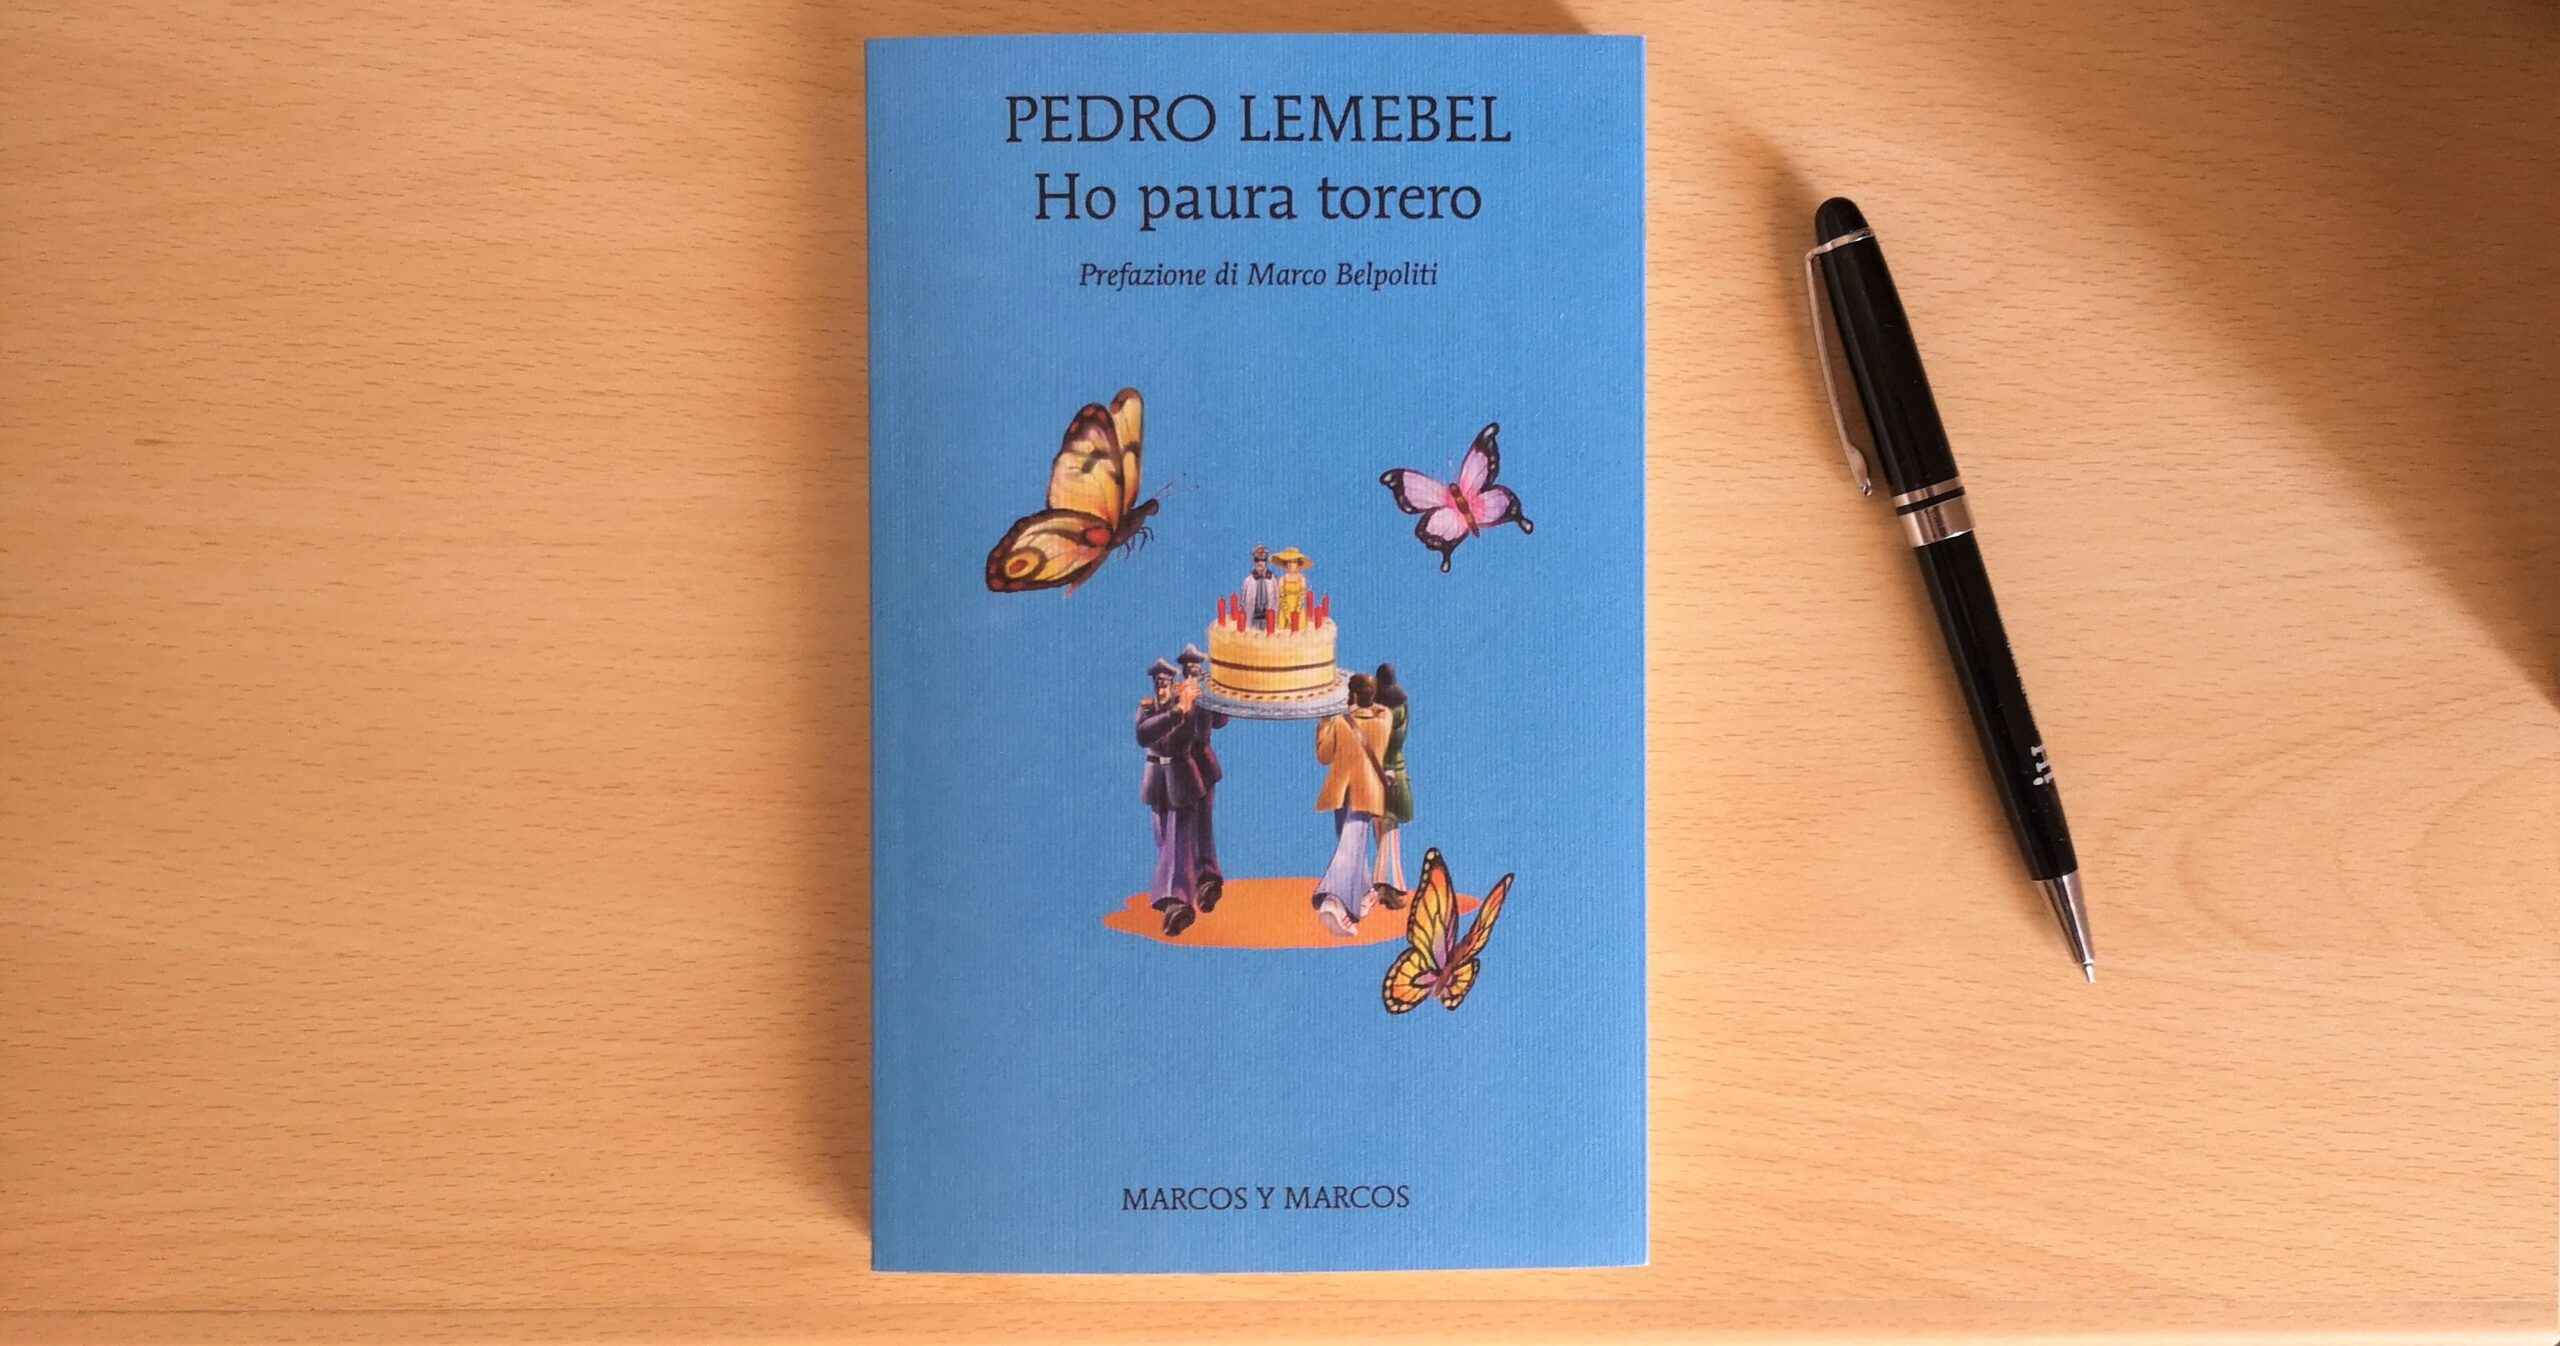 Pedro Lemebel – Ho paura torero #PedroLemebel #HoPauraTorero – 50 libri in  un anno